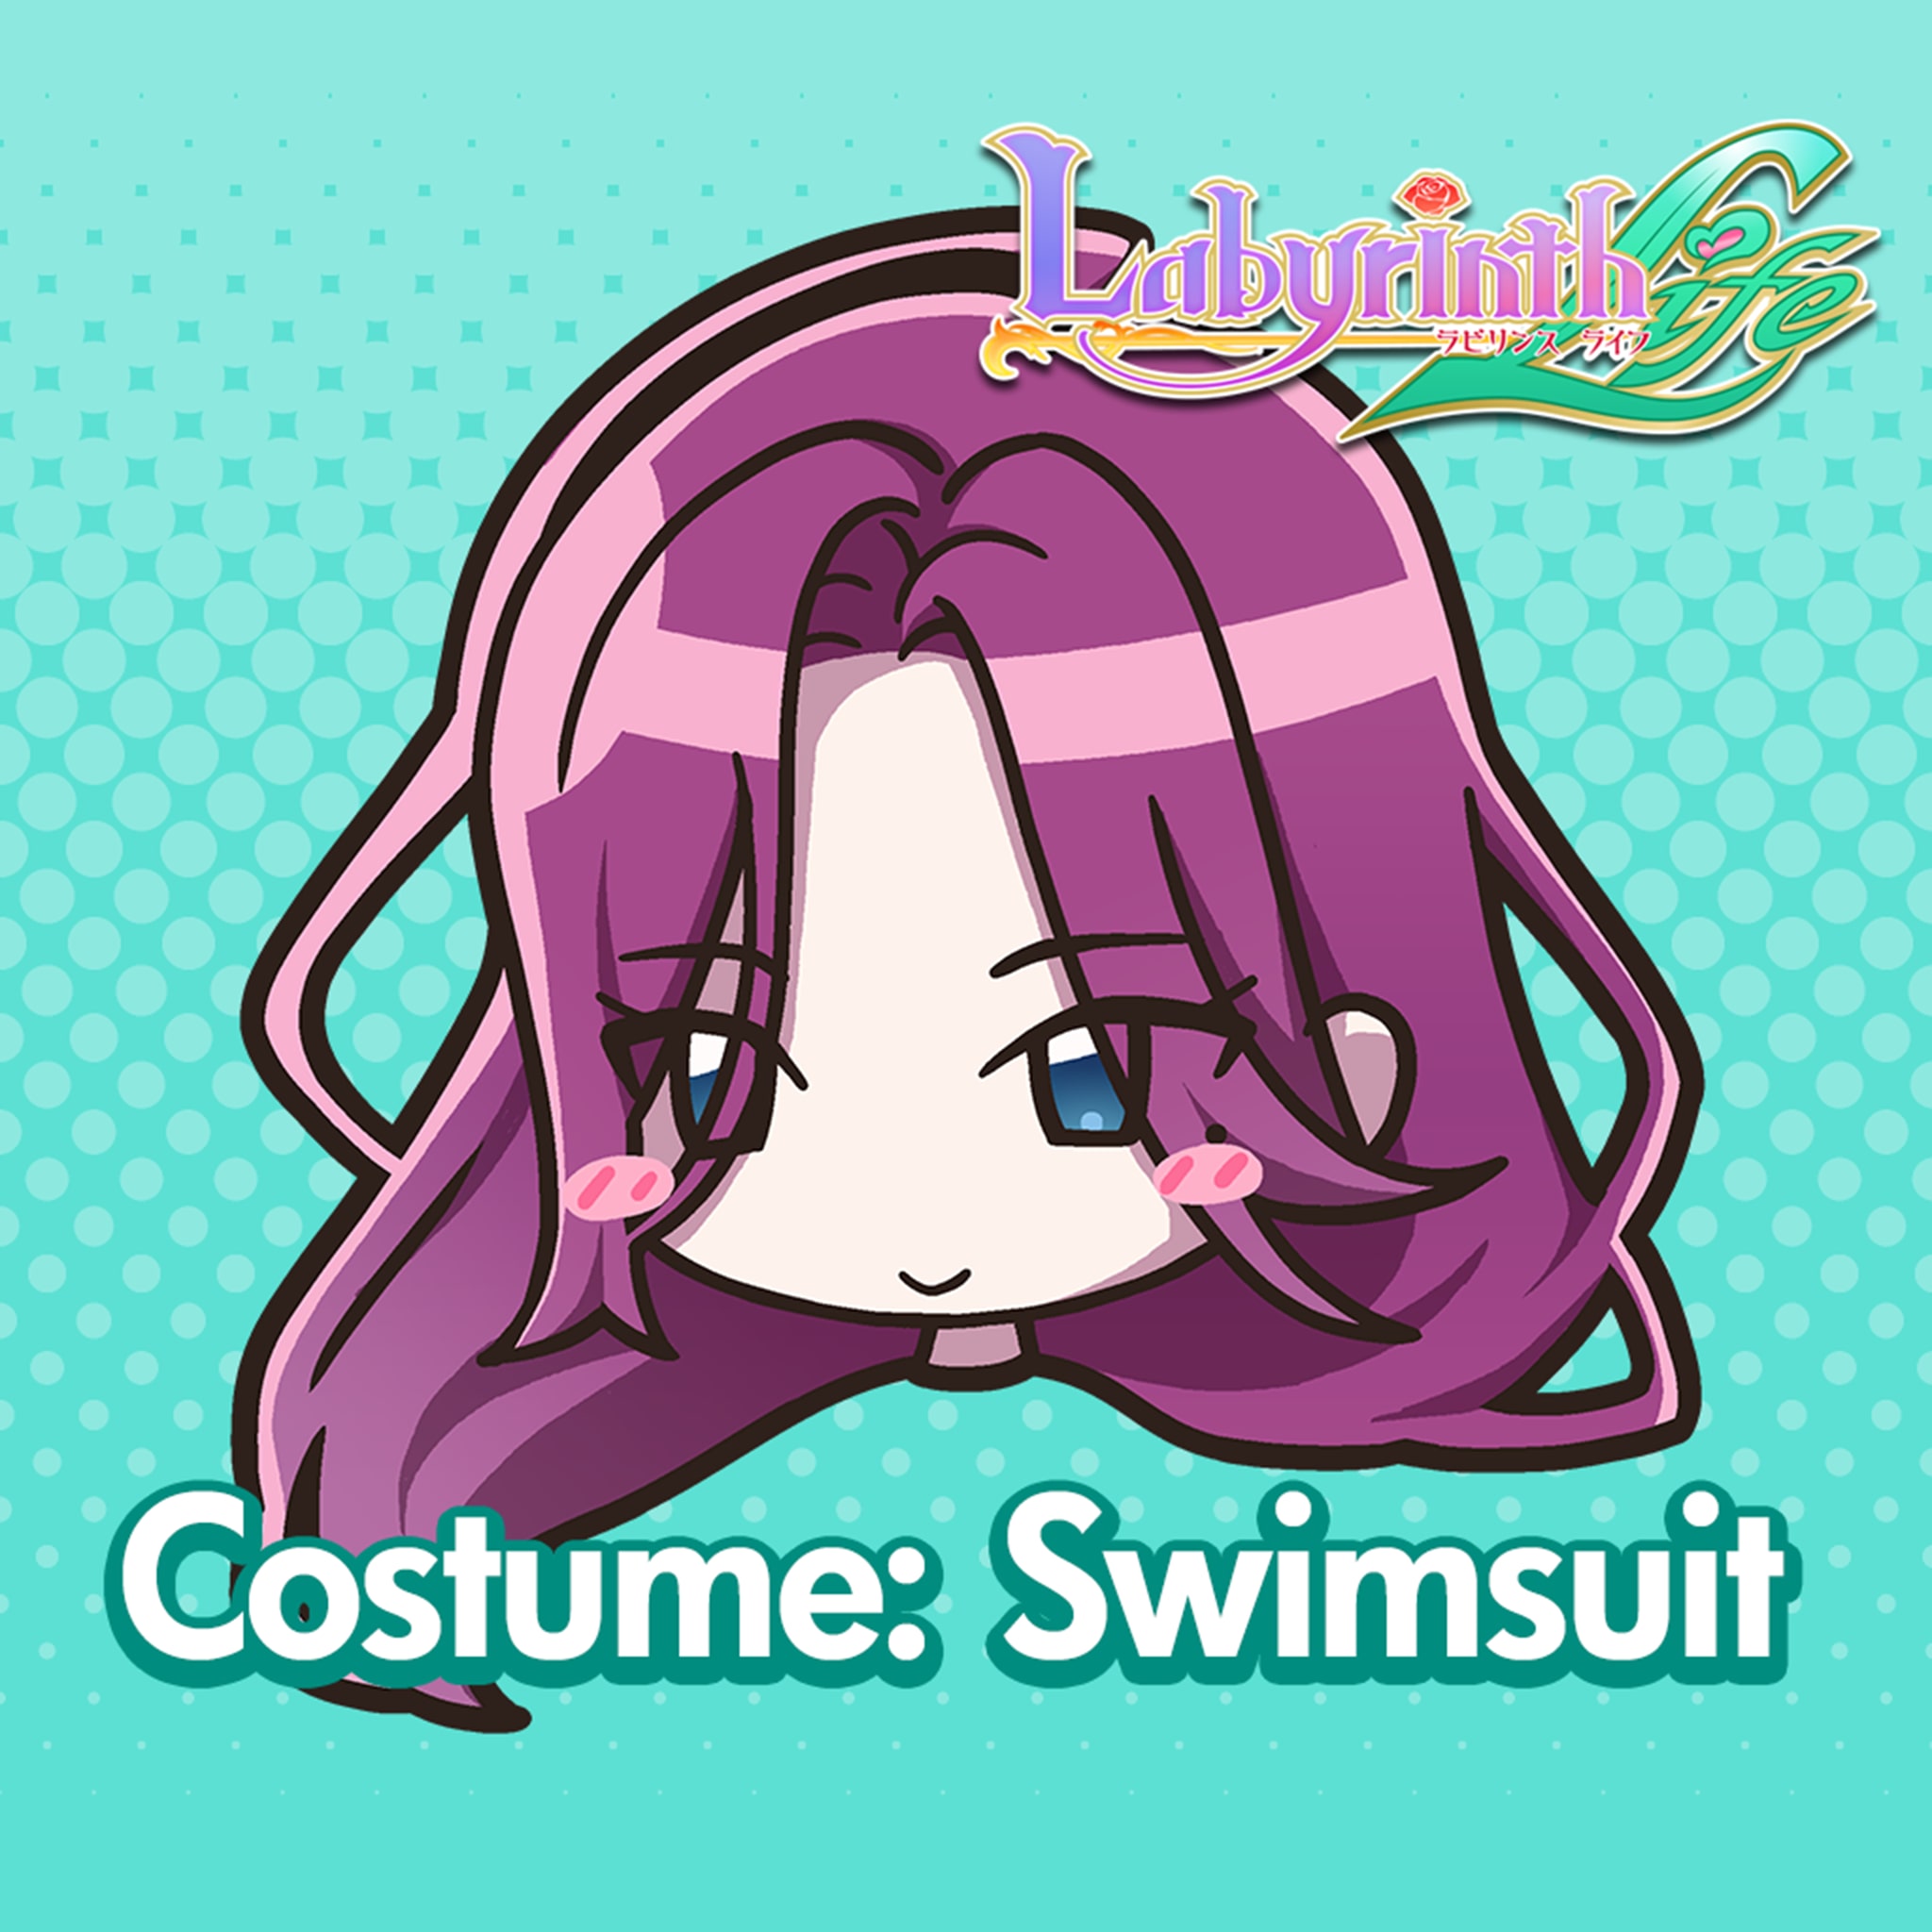 Labyrinth Life: Costume: Yurika (Swimsuit)